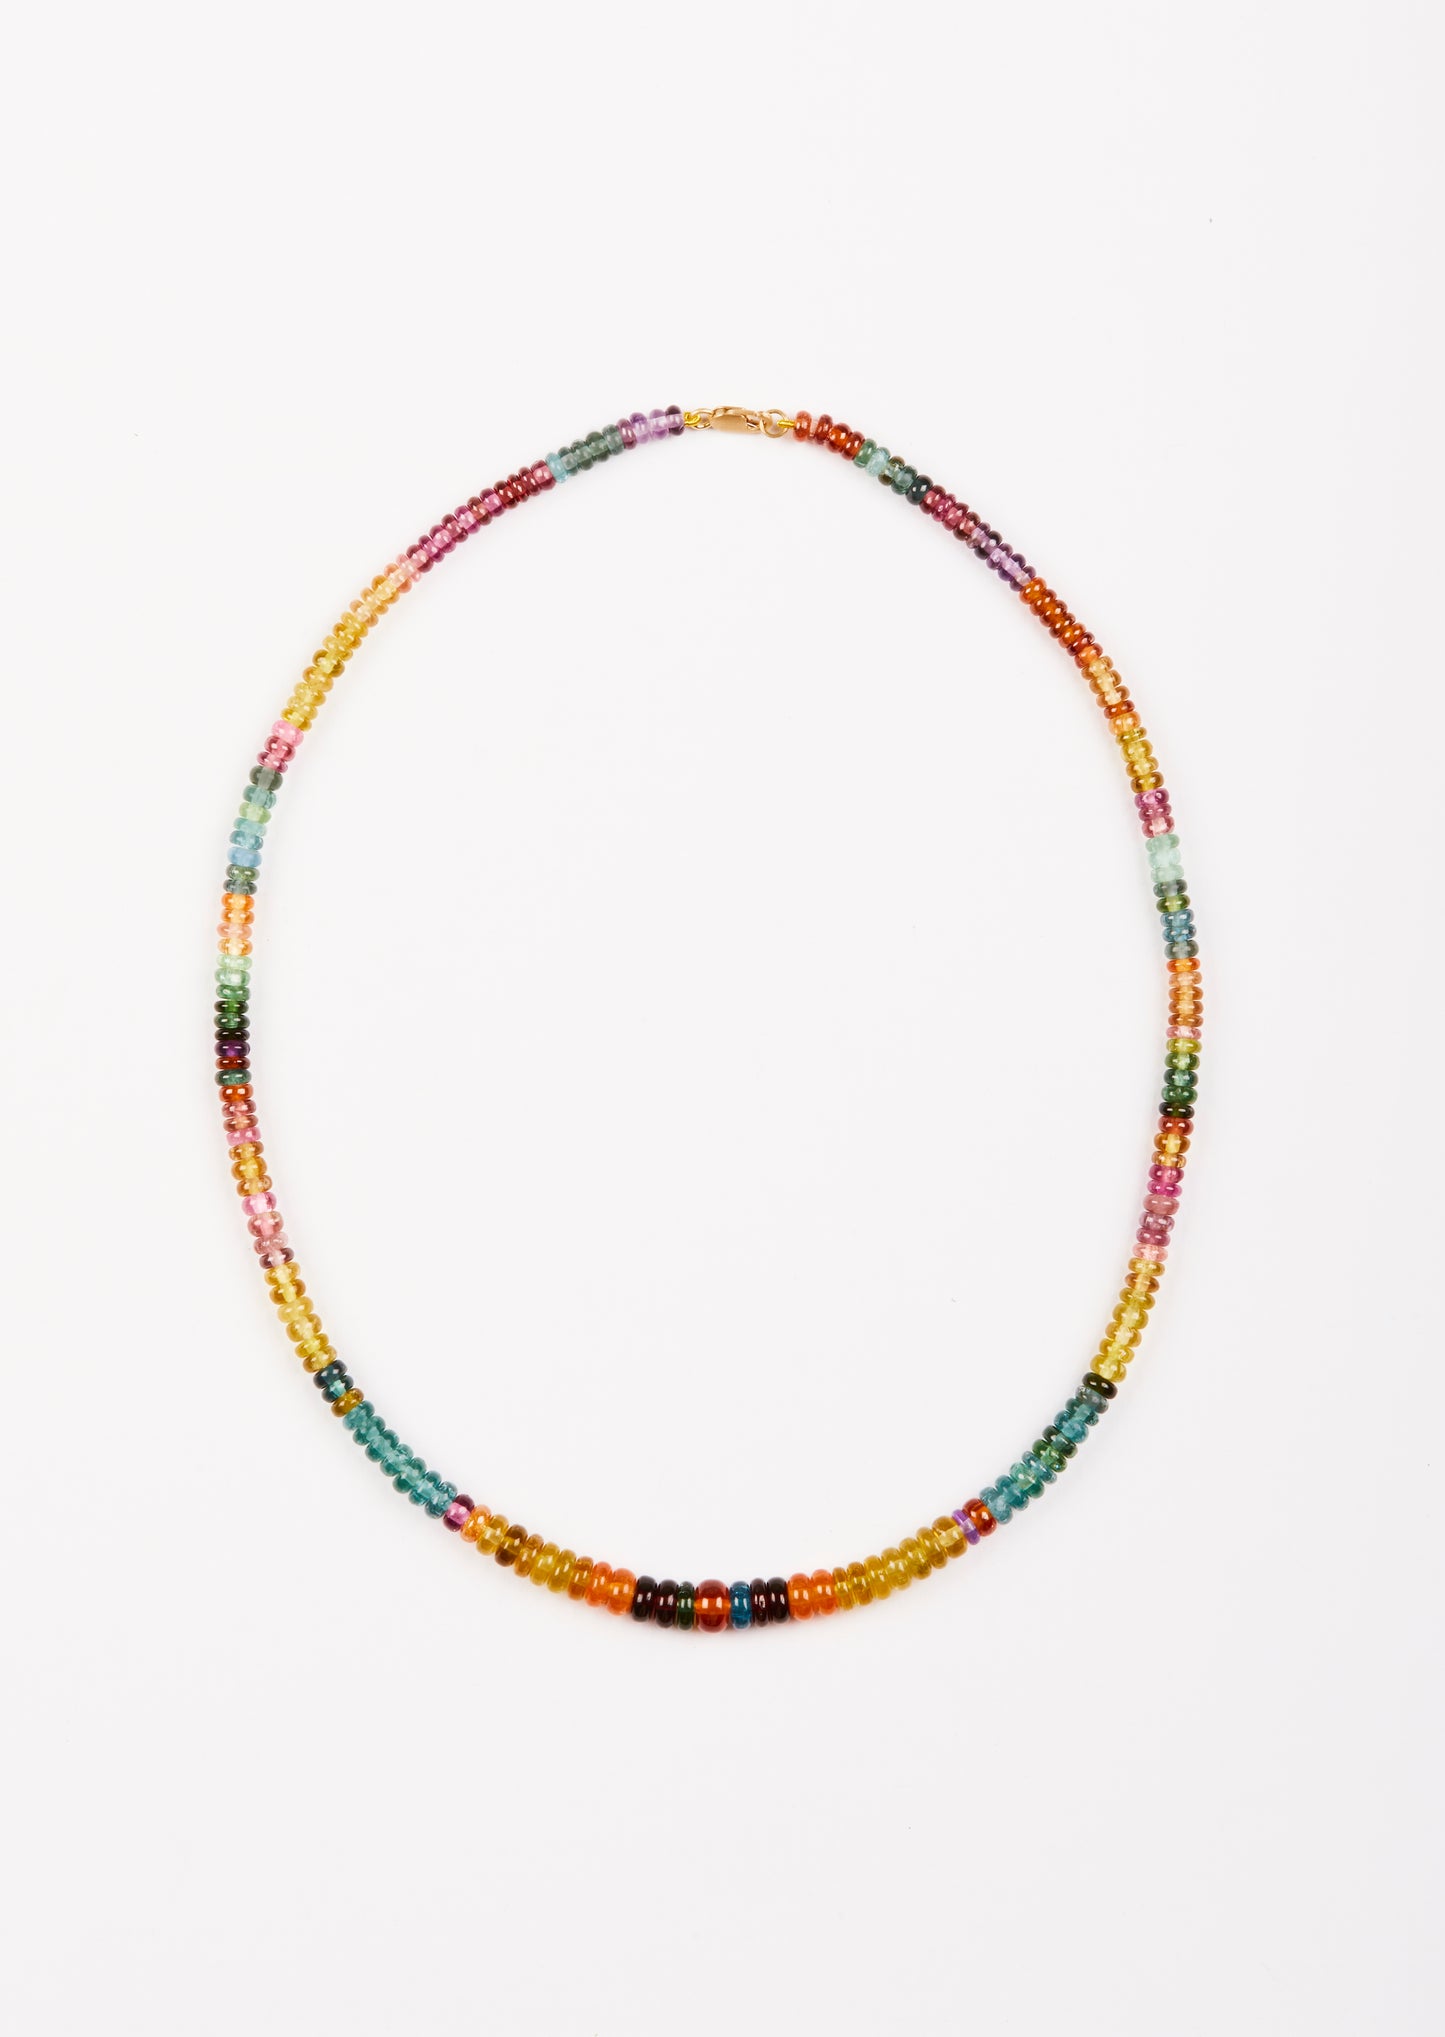 Tourmaline Beads